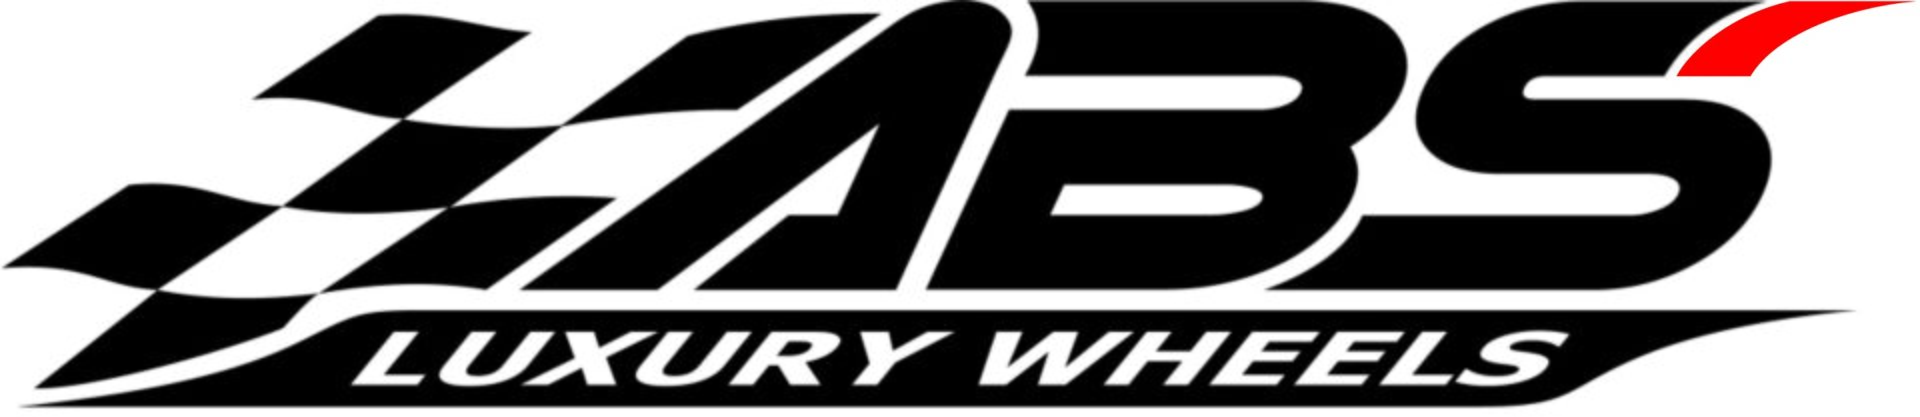 ABS-Wheels-Logo